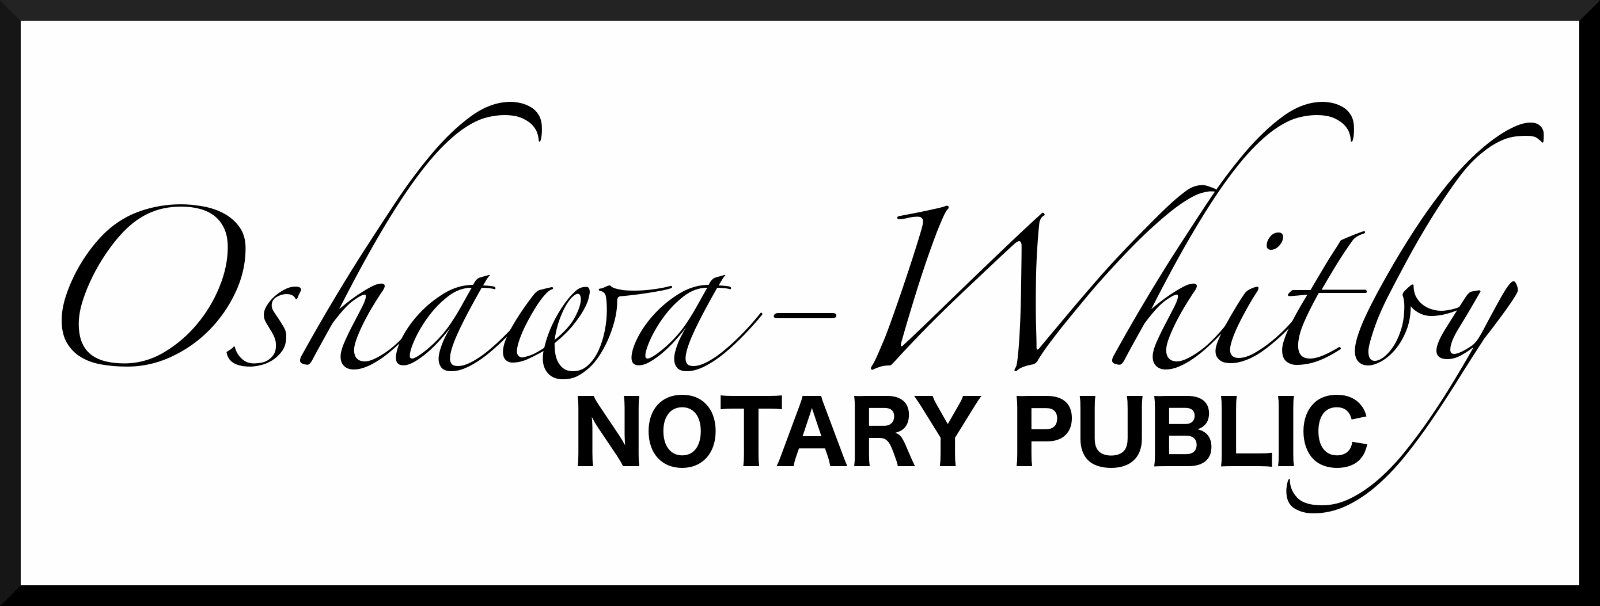 Oshawa-Whitby Notary Public: as low as $10